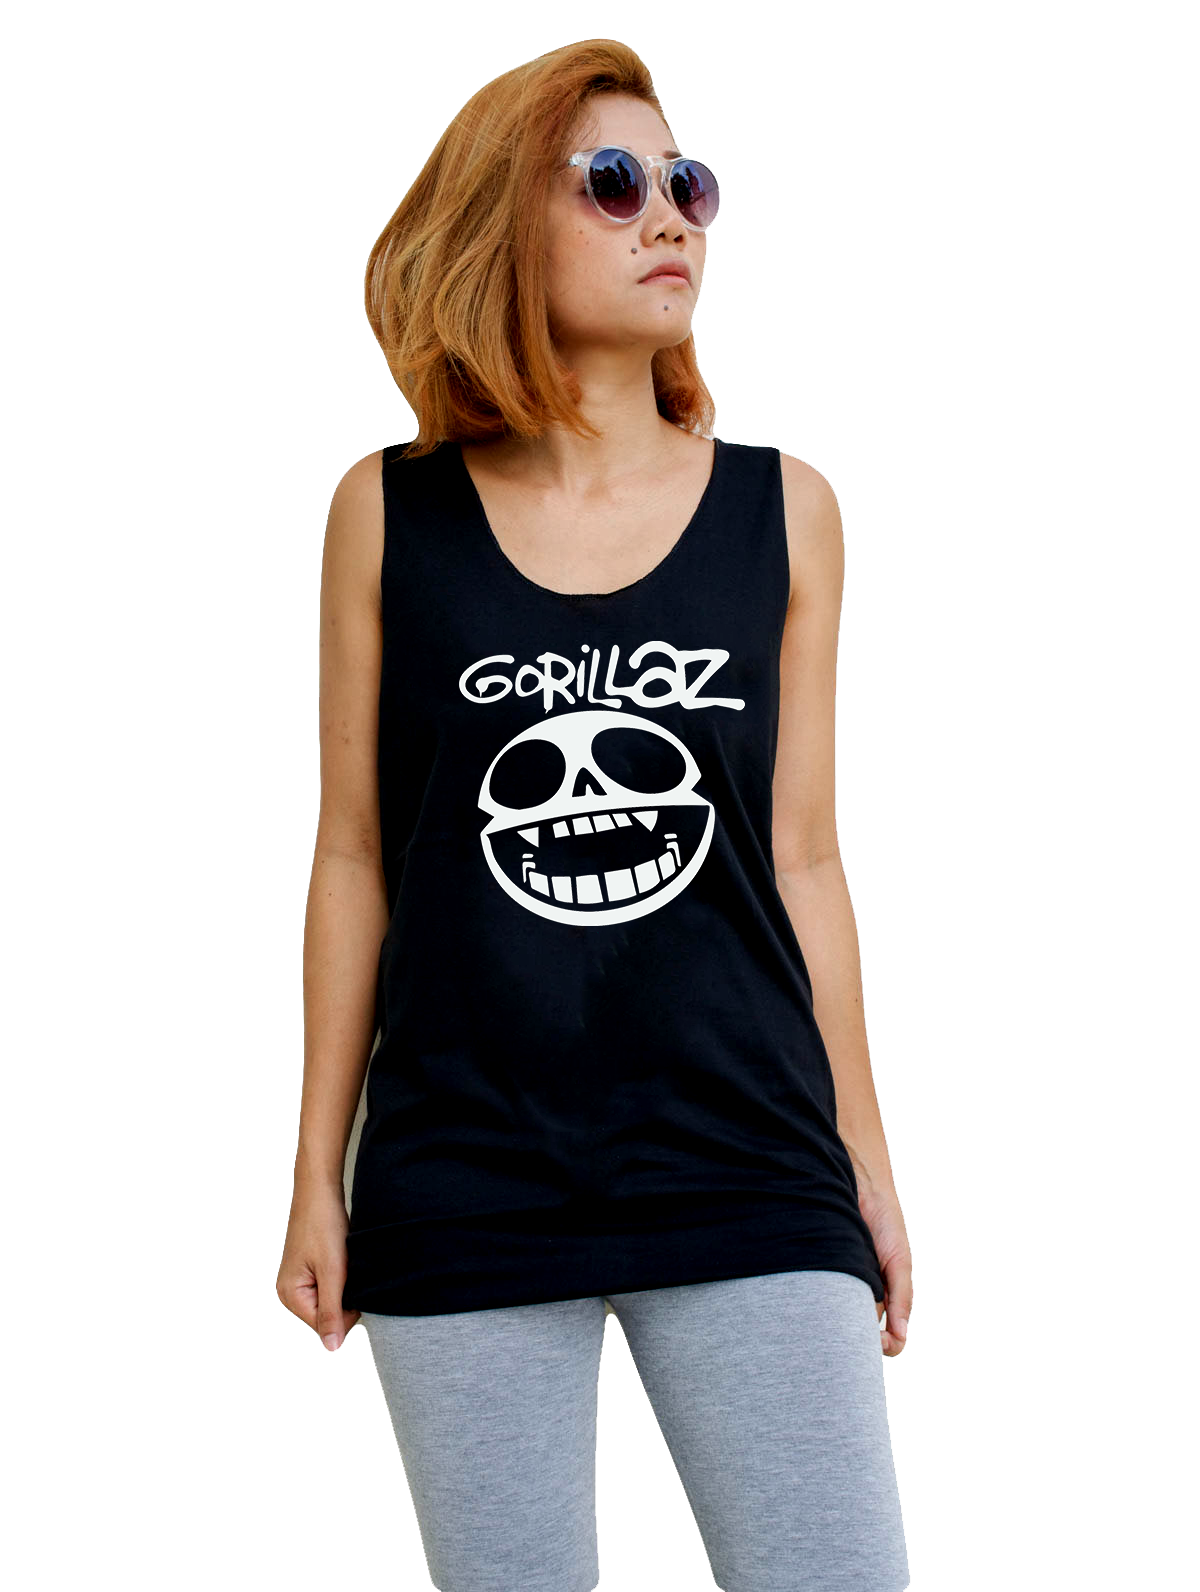 Unisex Gorillaz Tank-Top Singlet vest Sleeveless T-shirt